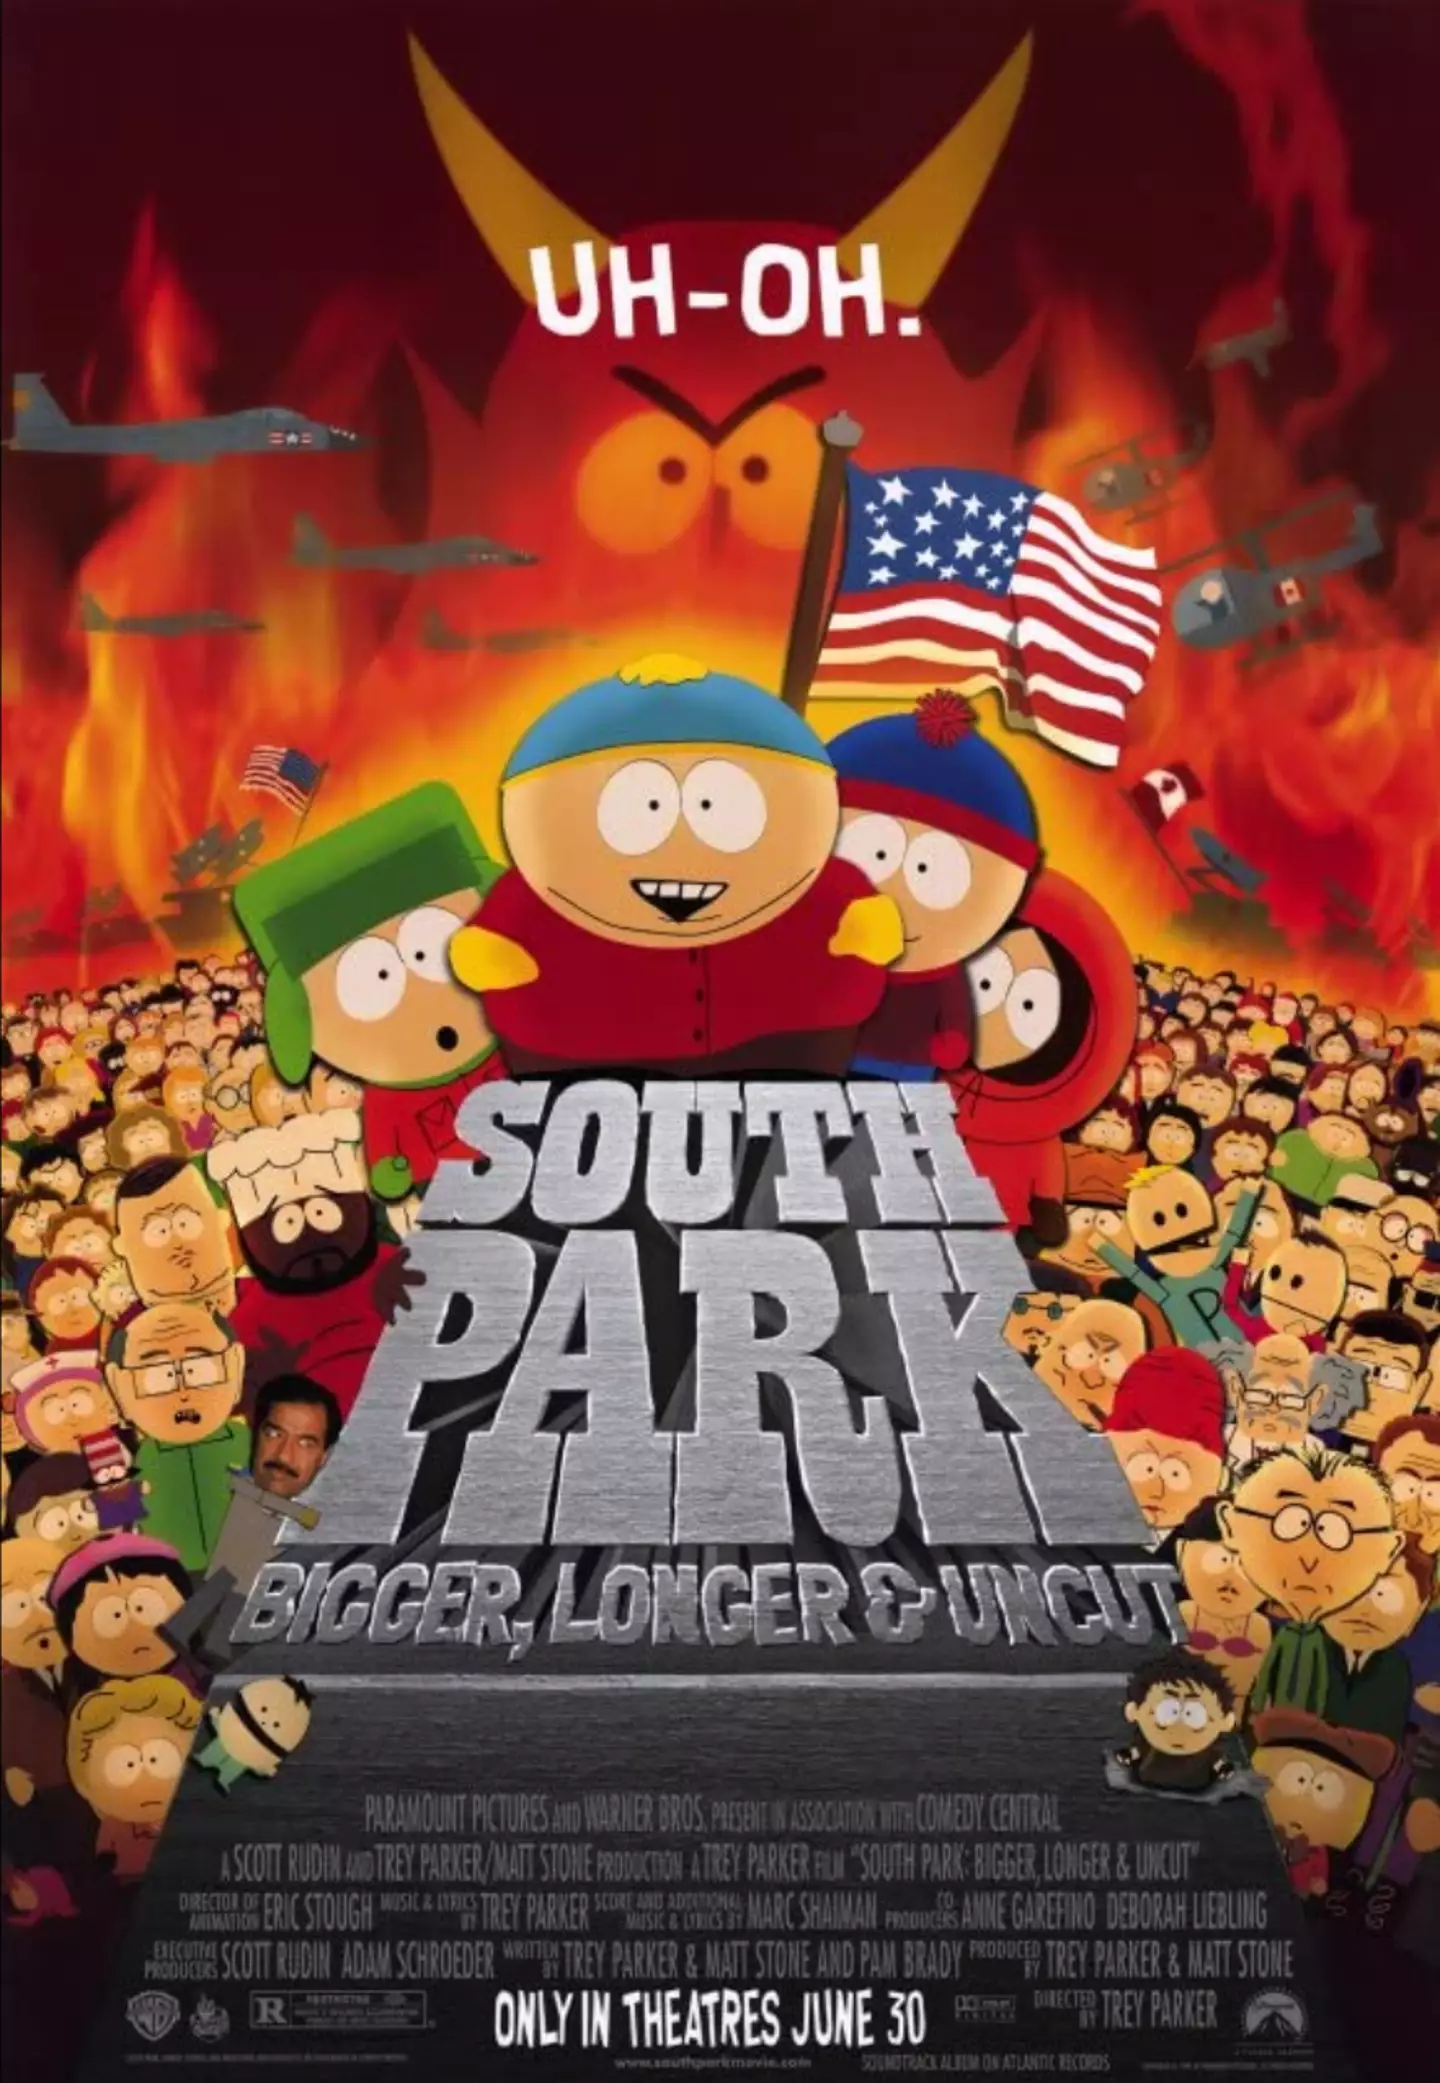 Poster for South Park: Bigger, Longer & Uncut.